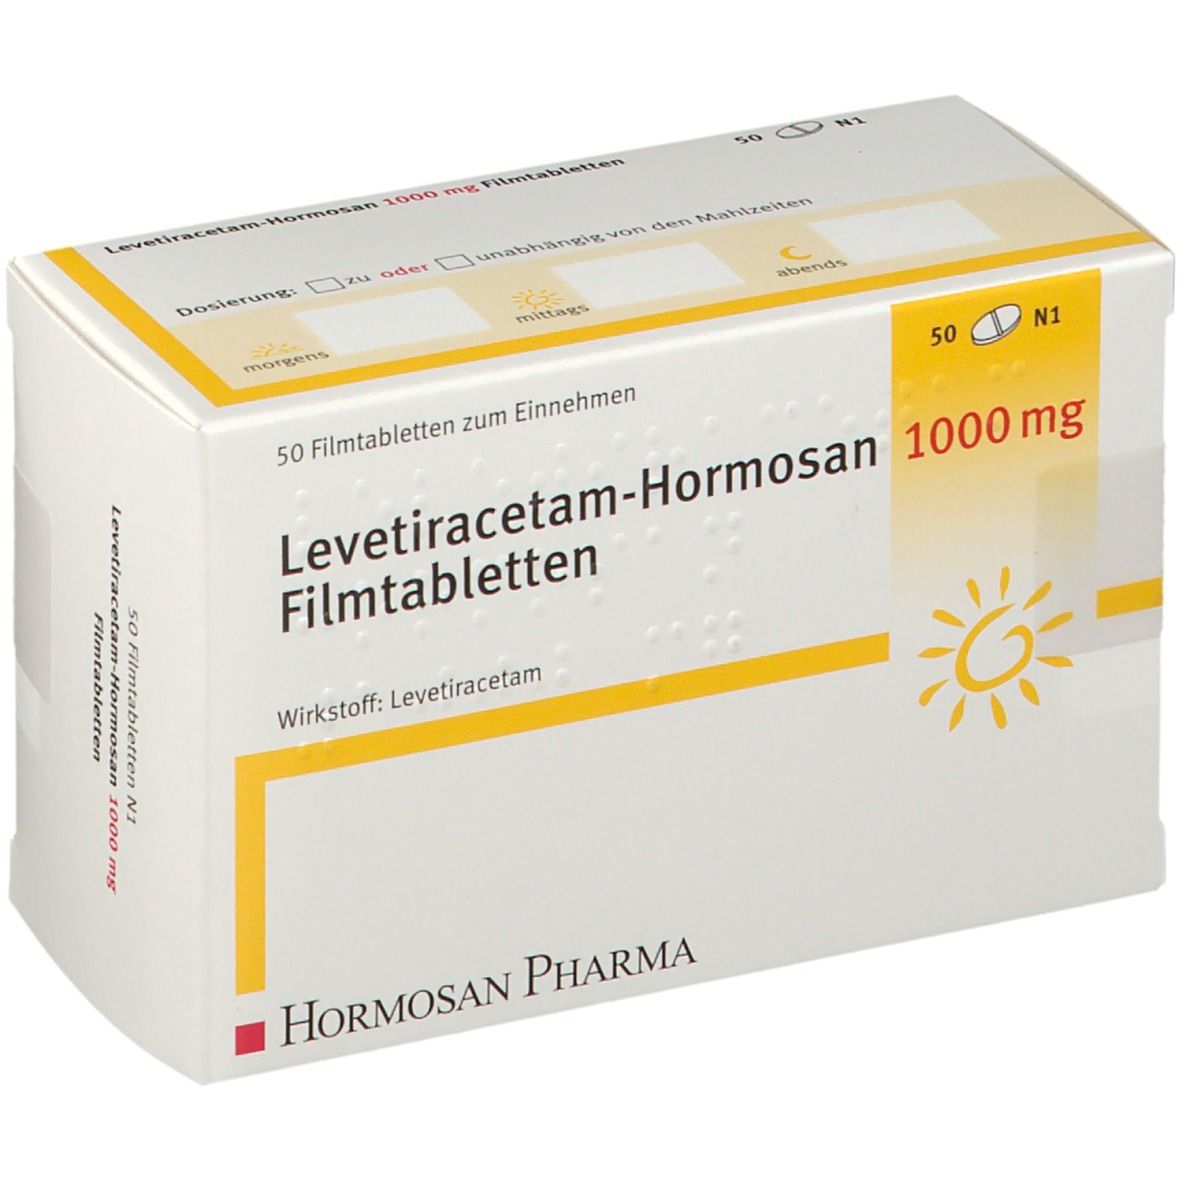 Levetiracetam-Hormosan 1000 mg